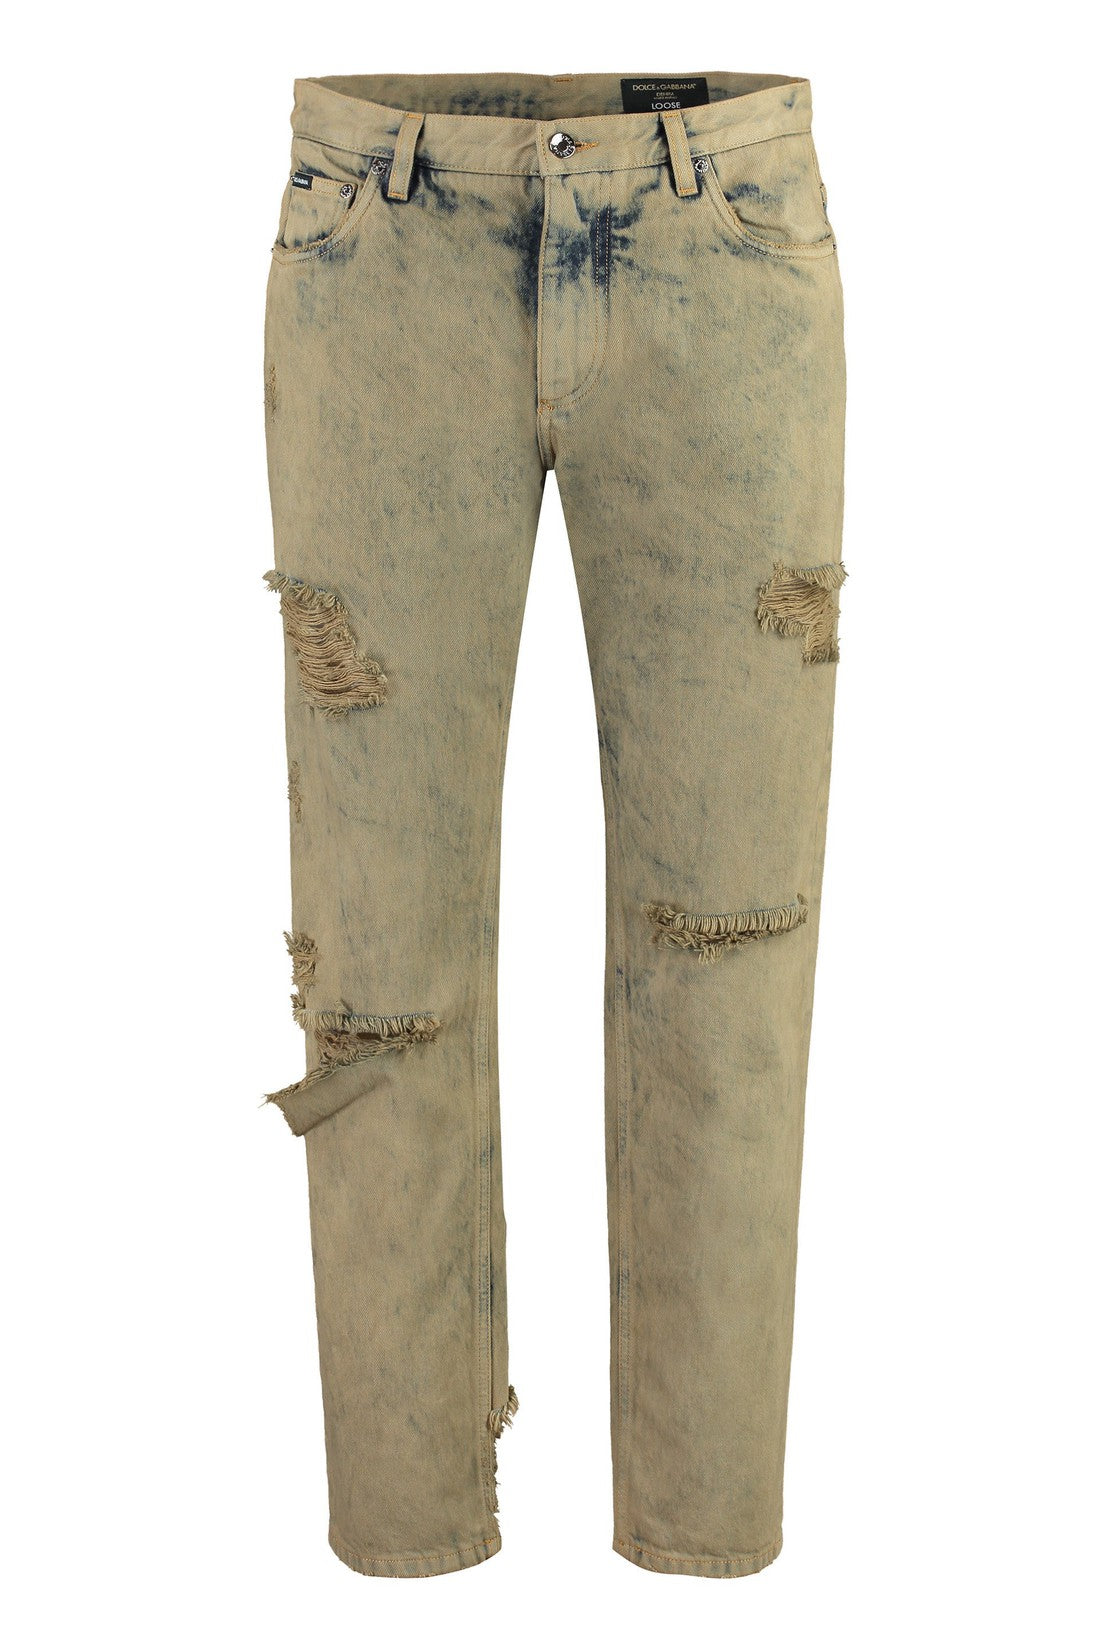 Dolce & Gabbana-OUTLET-SALE-Loose 5-pocket jeans-ARCHIVIST